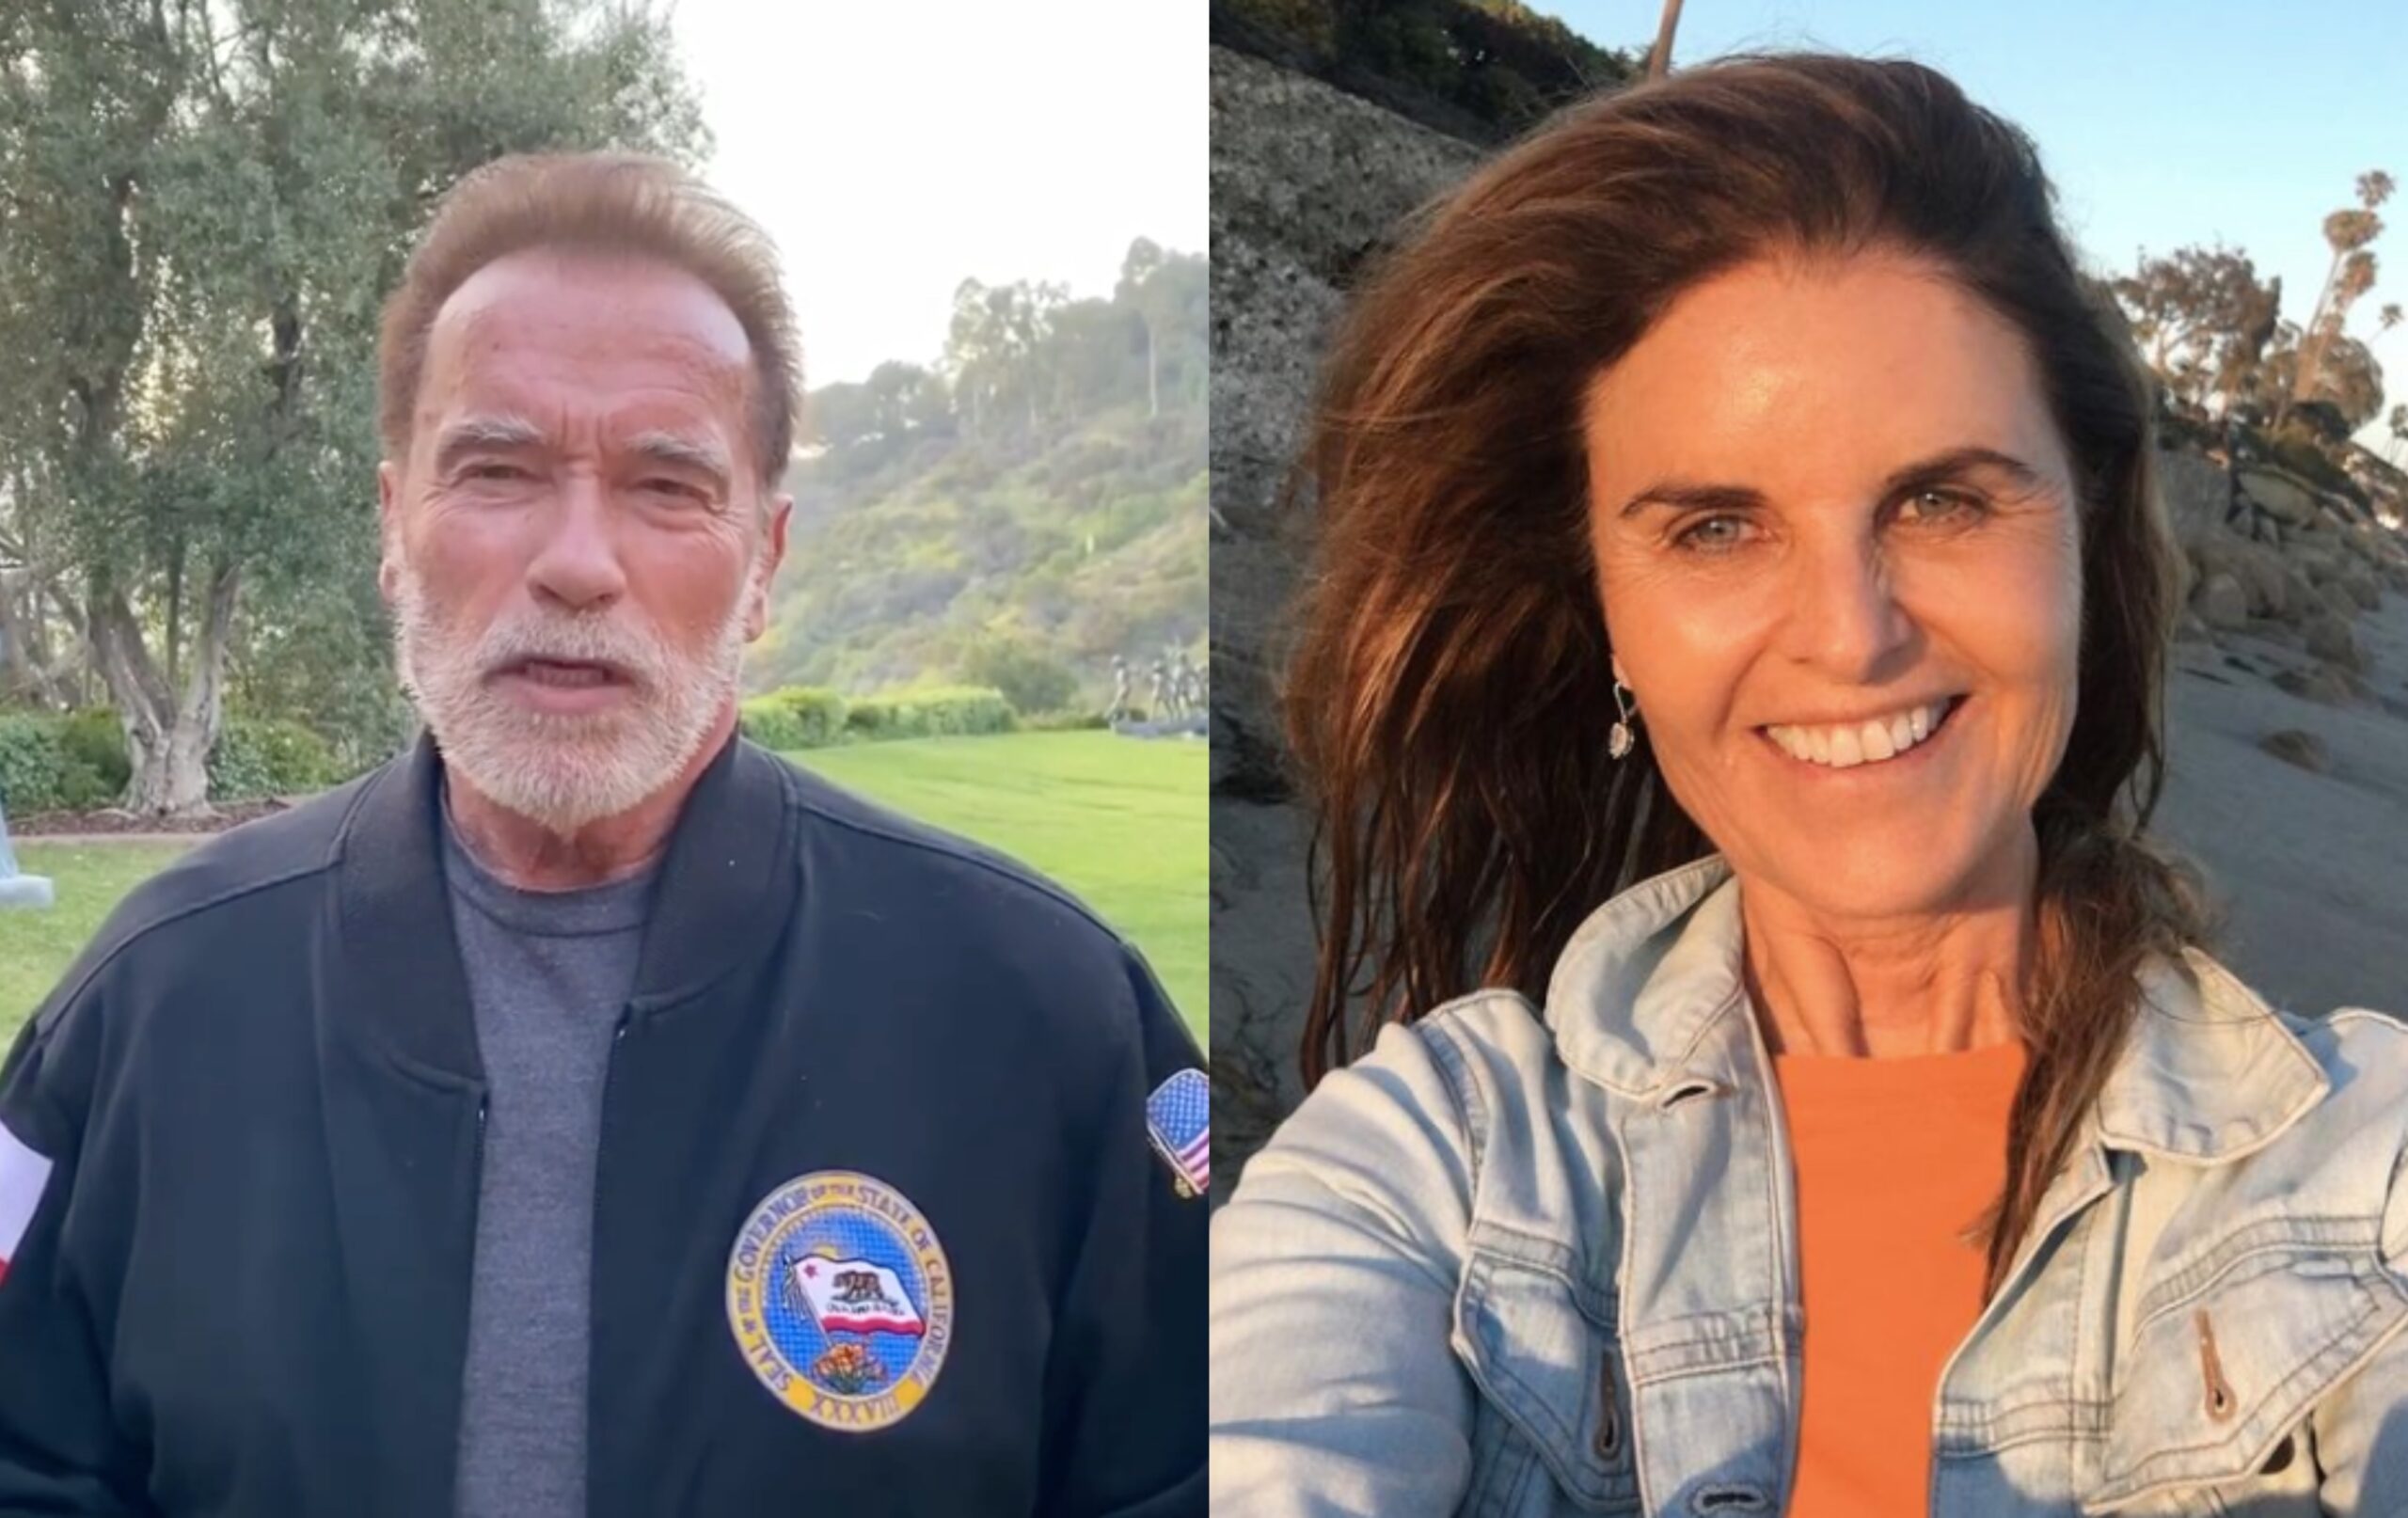 Arnold Schwarzenegger and Maria Shriver are finally divorced